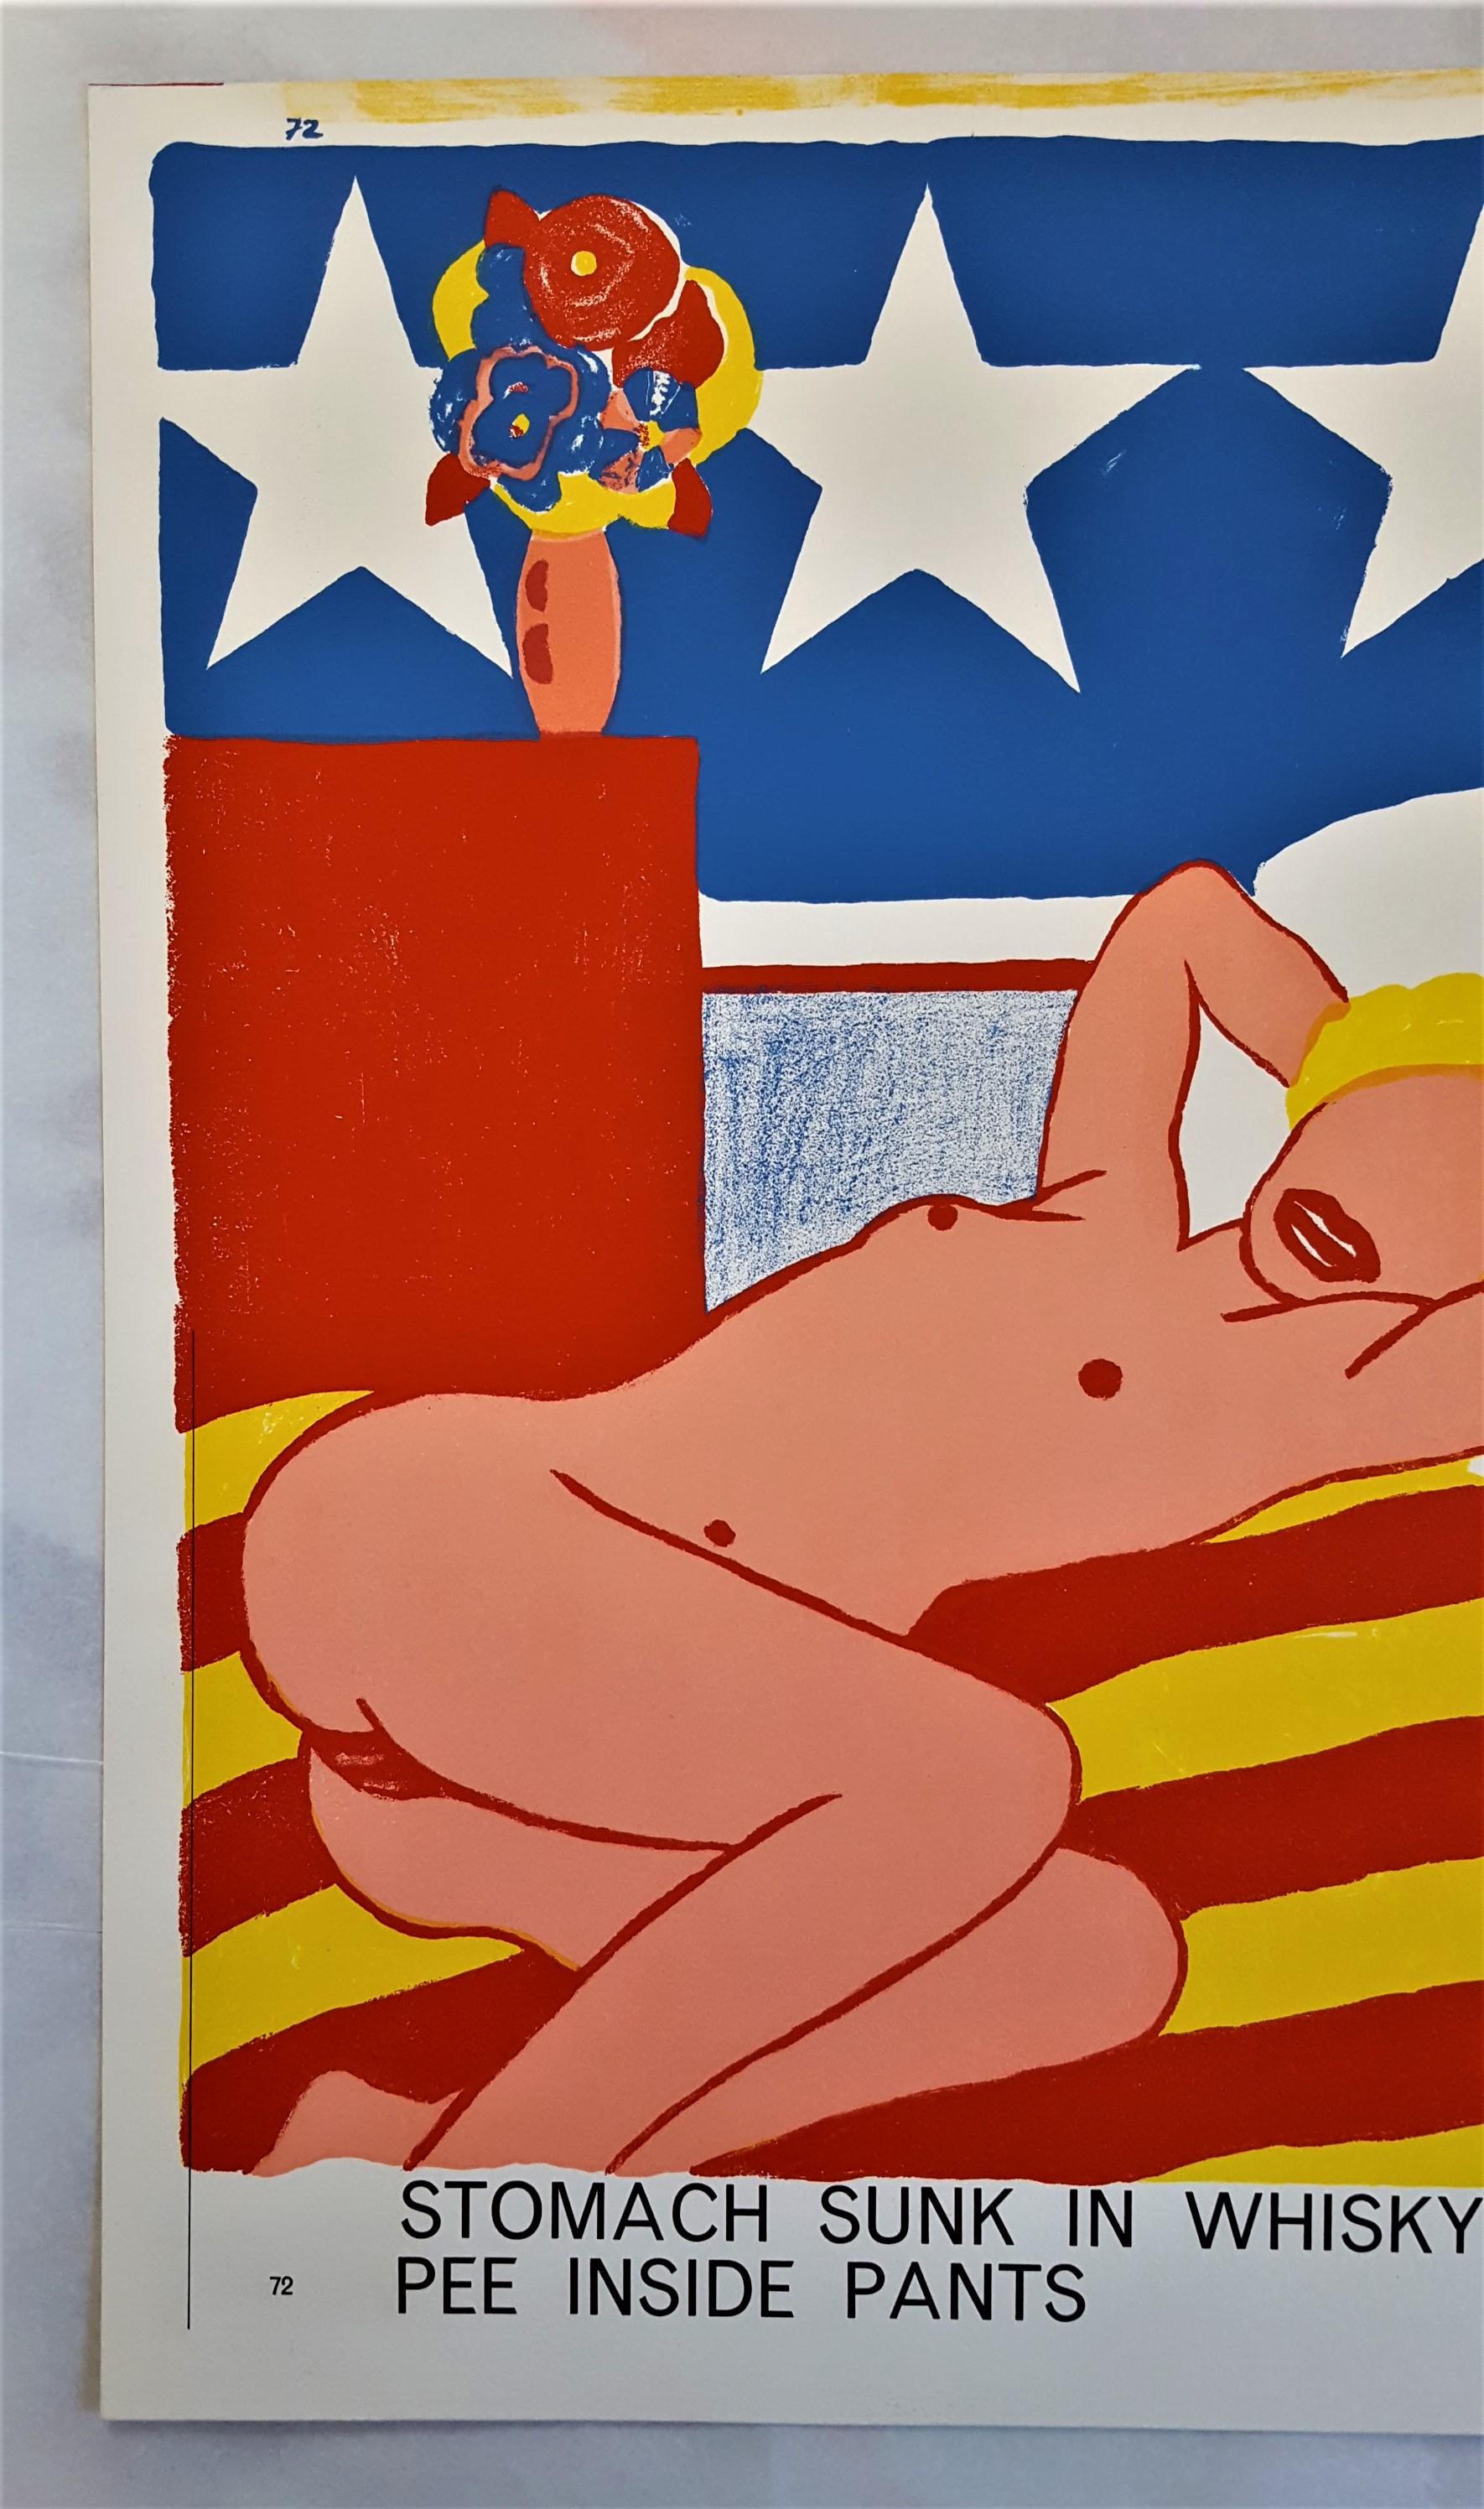 Untitled (1¢ Life) - Beige Nude Print by Tom Wesselmann